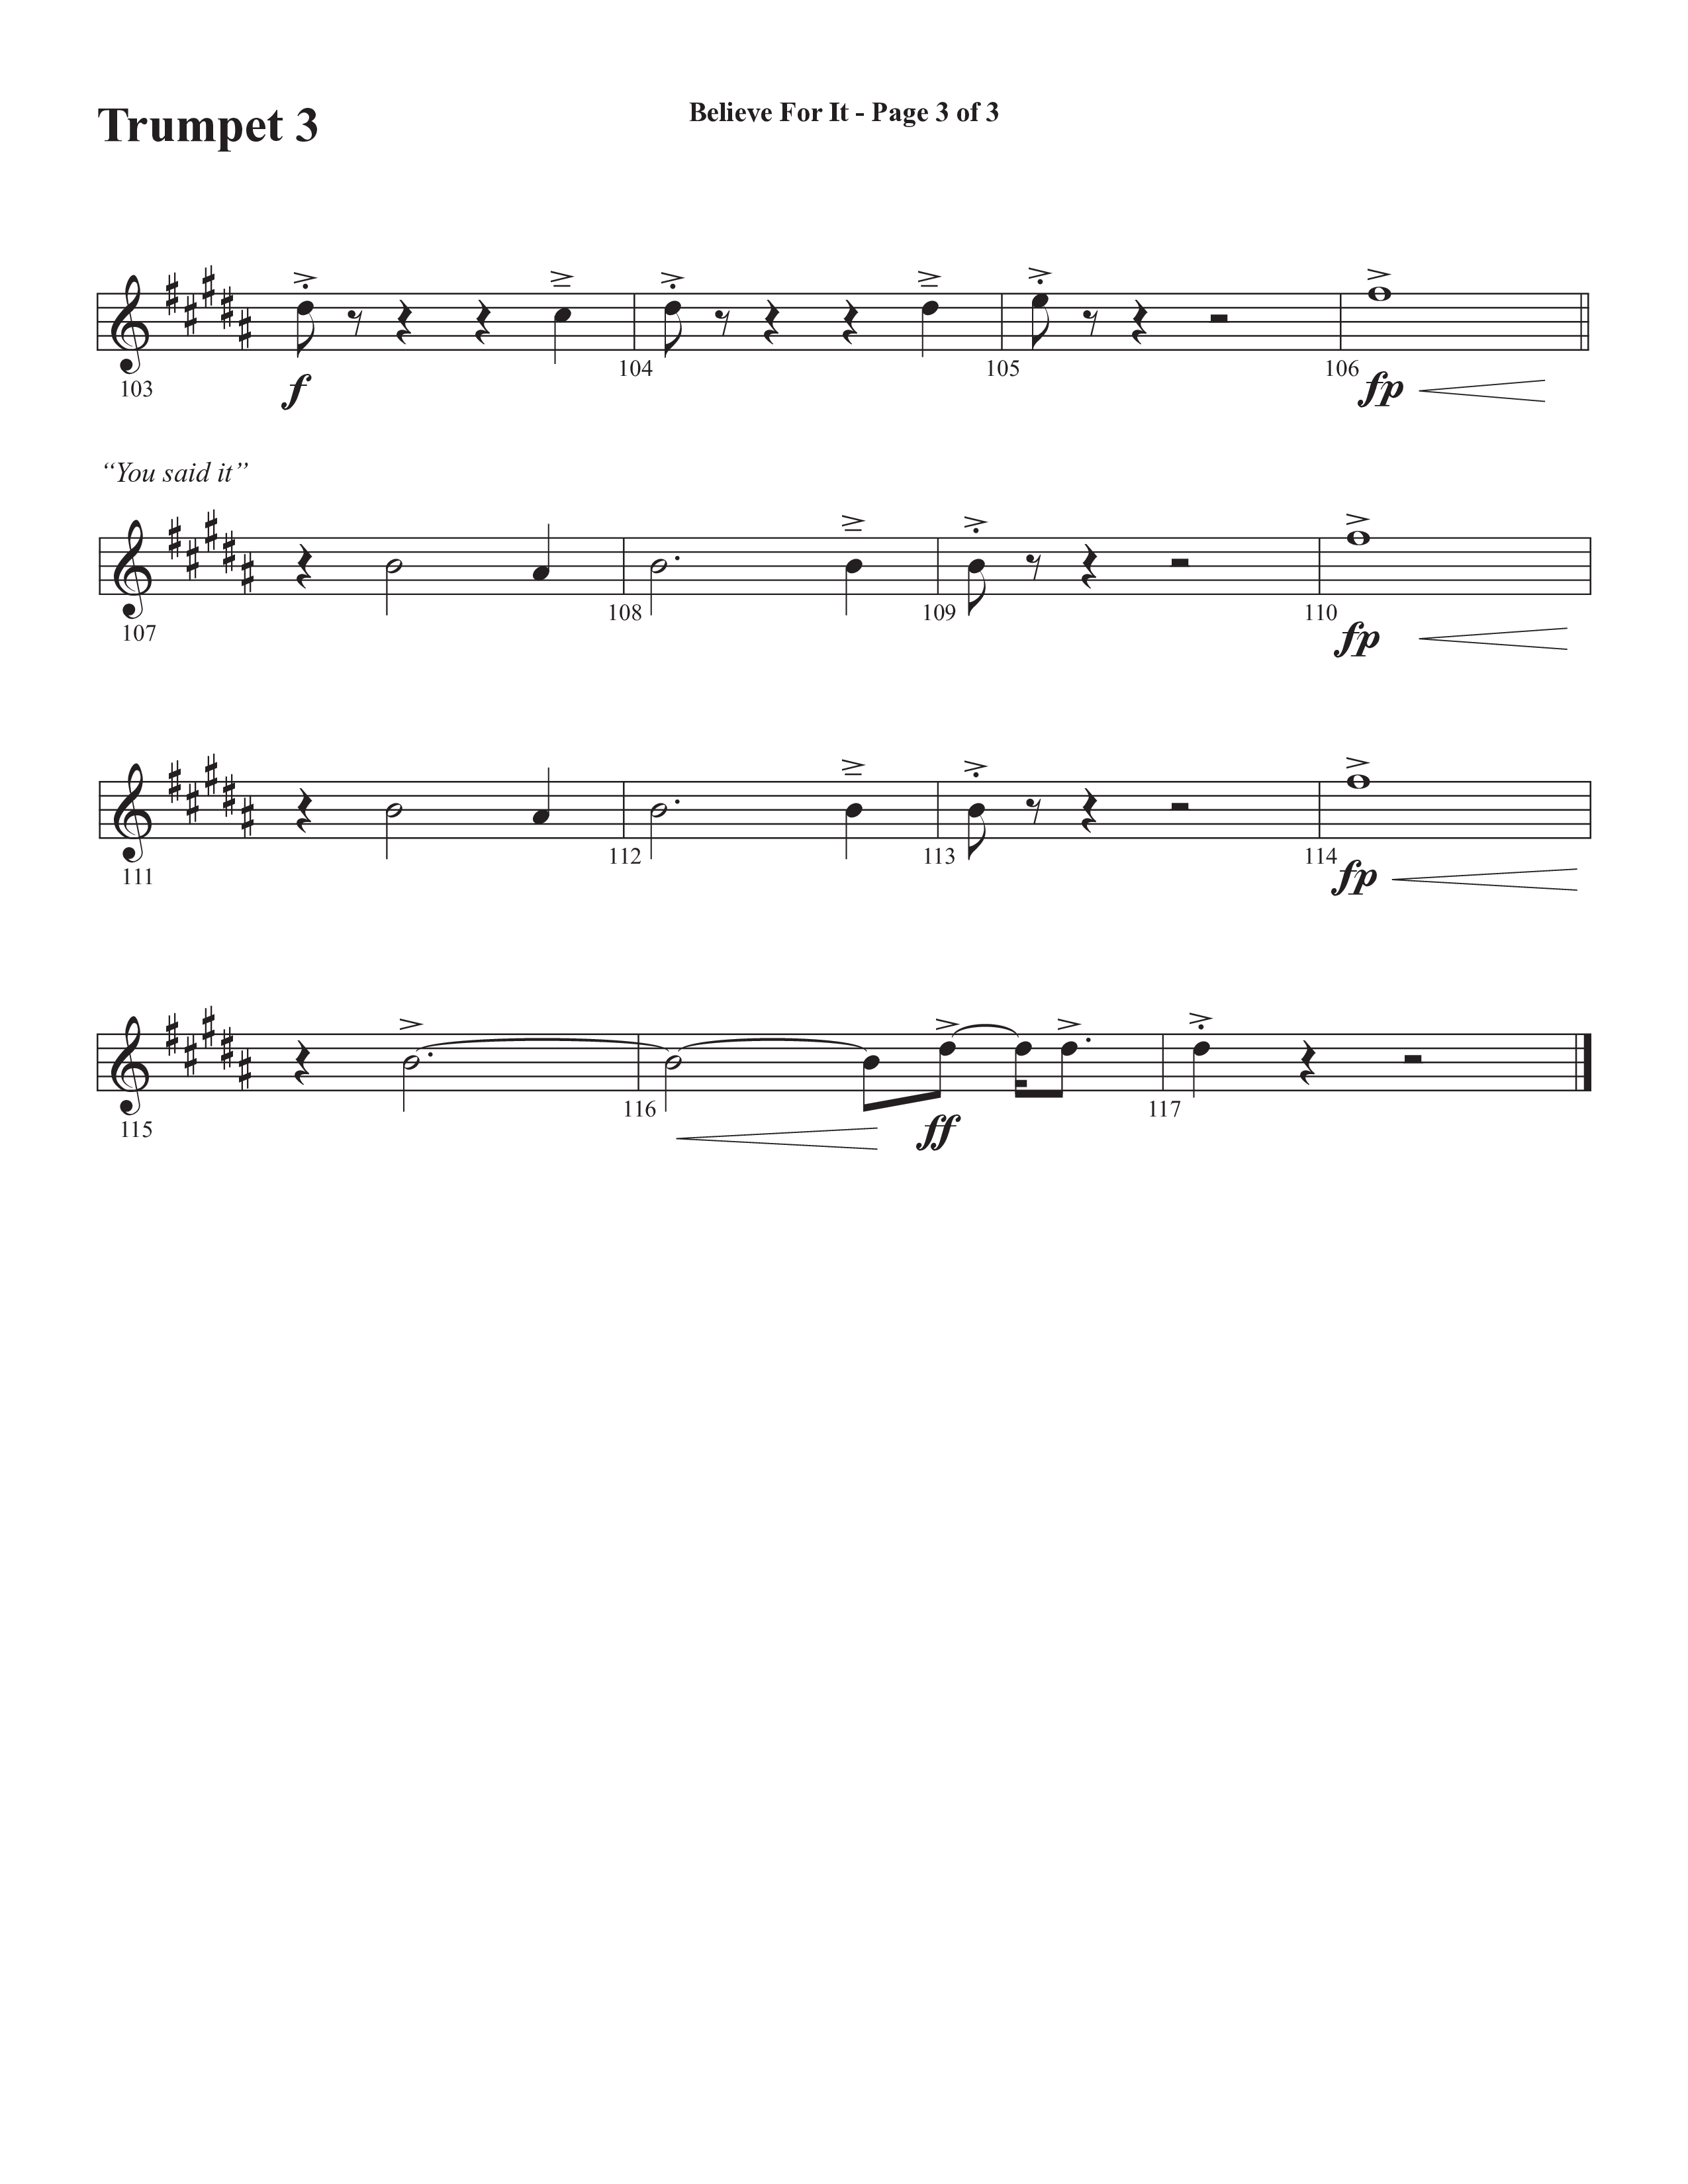 Believe For It (Choral Anthem SATB) Trumpet 3 (Semsen Music / Arr. Phil Nitz)